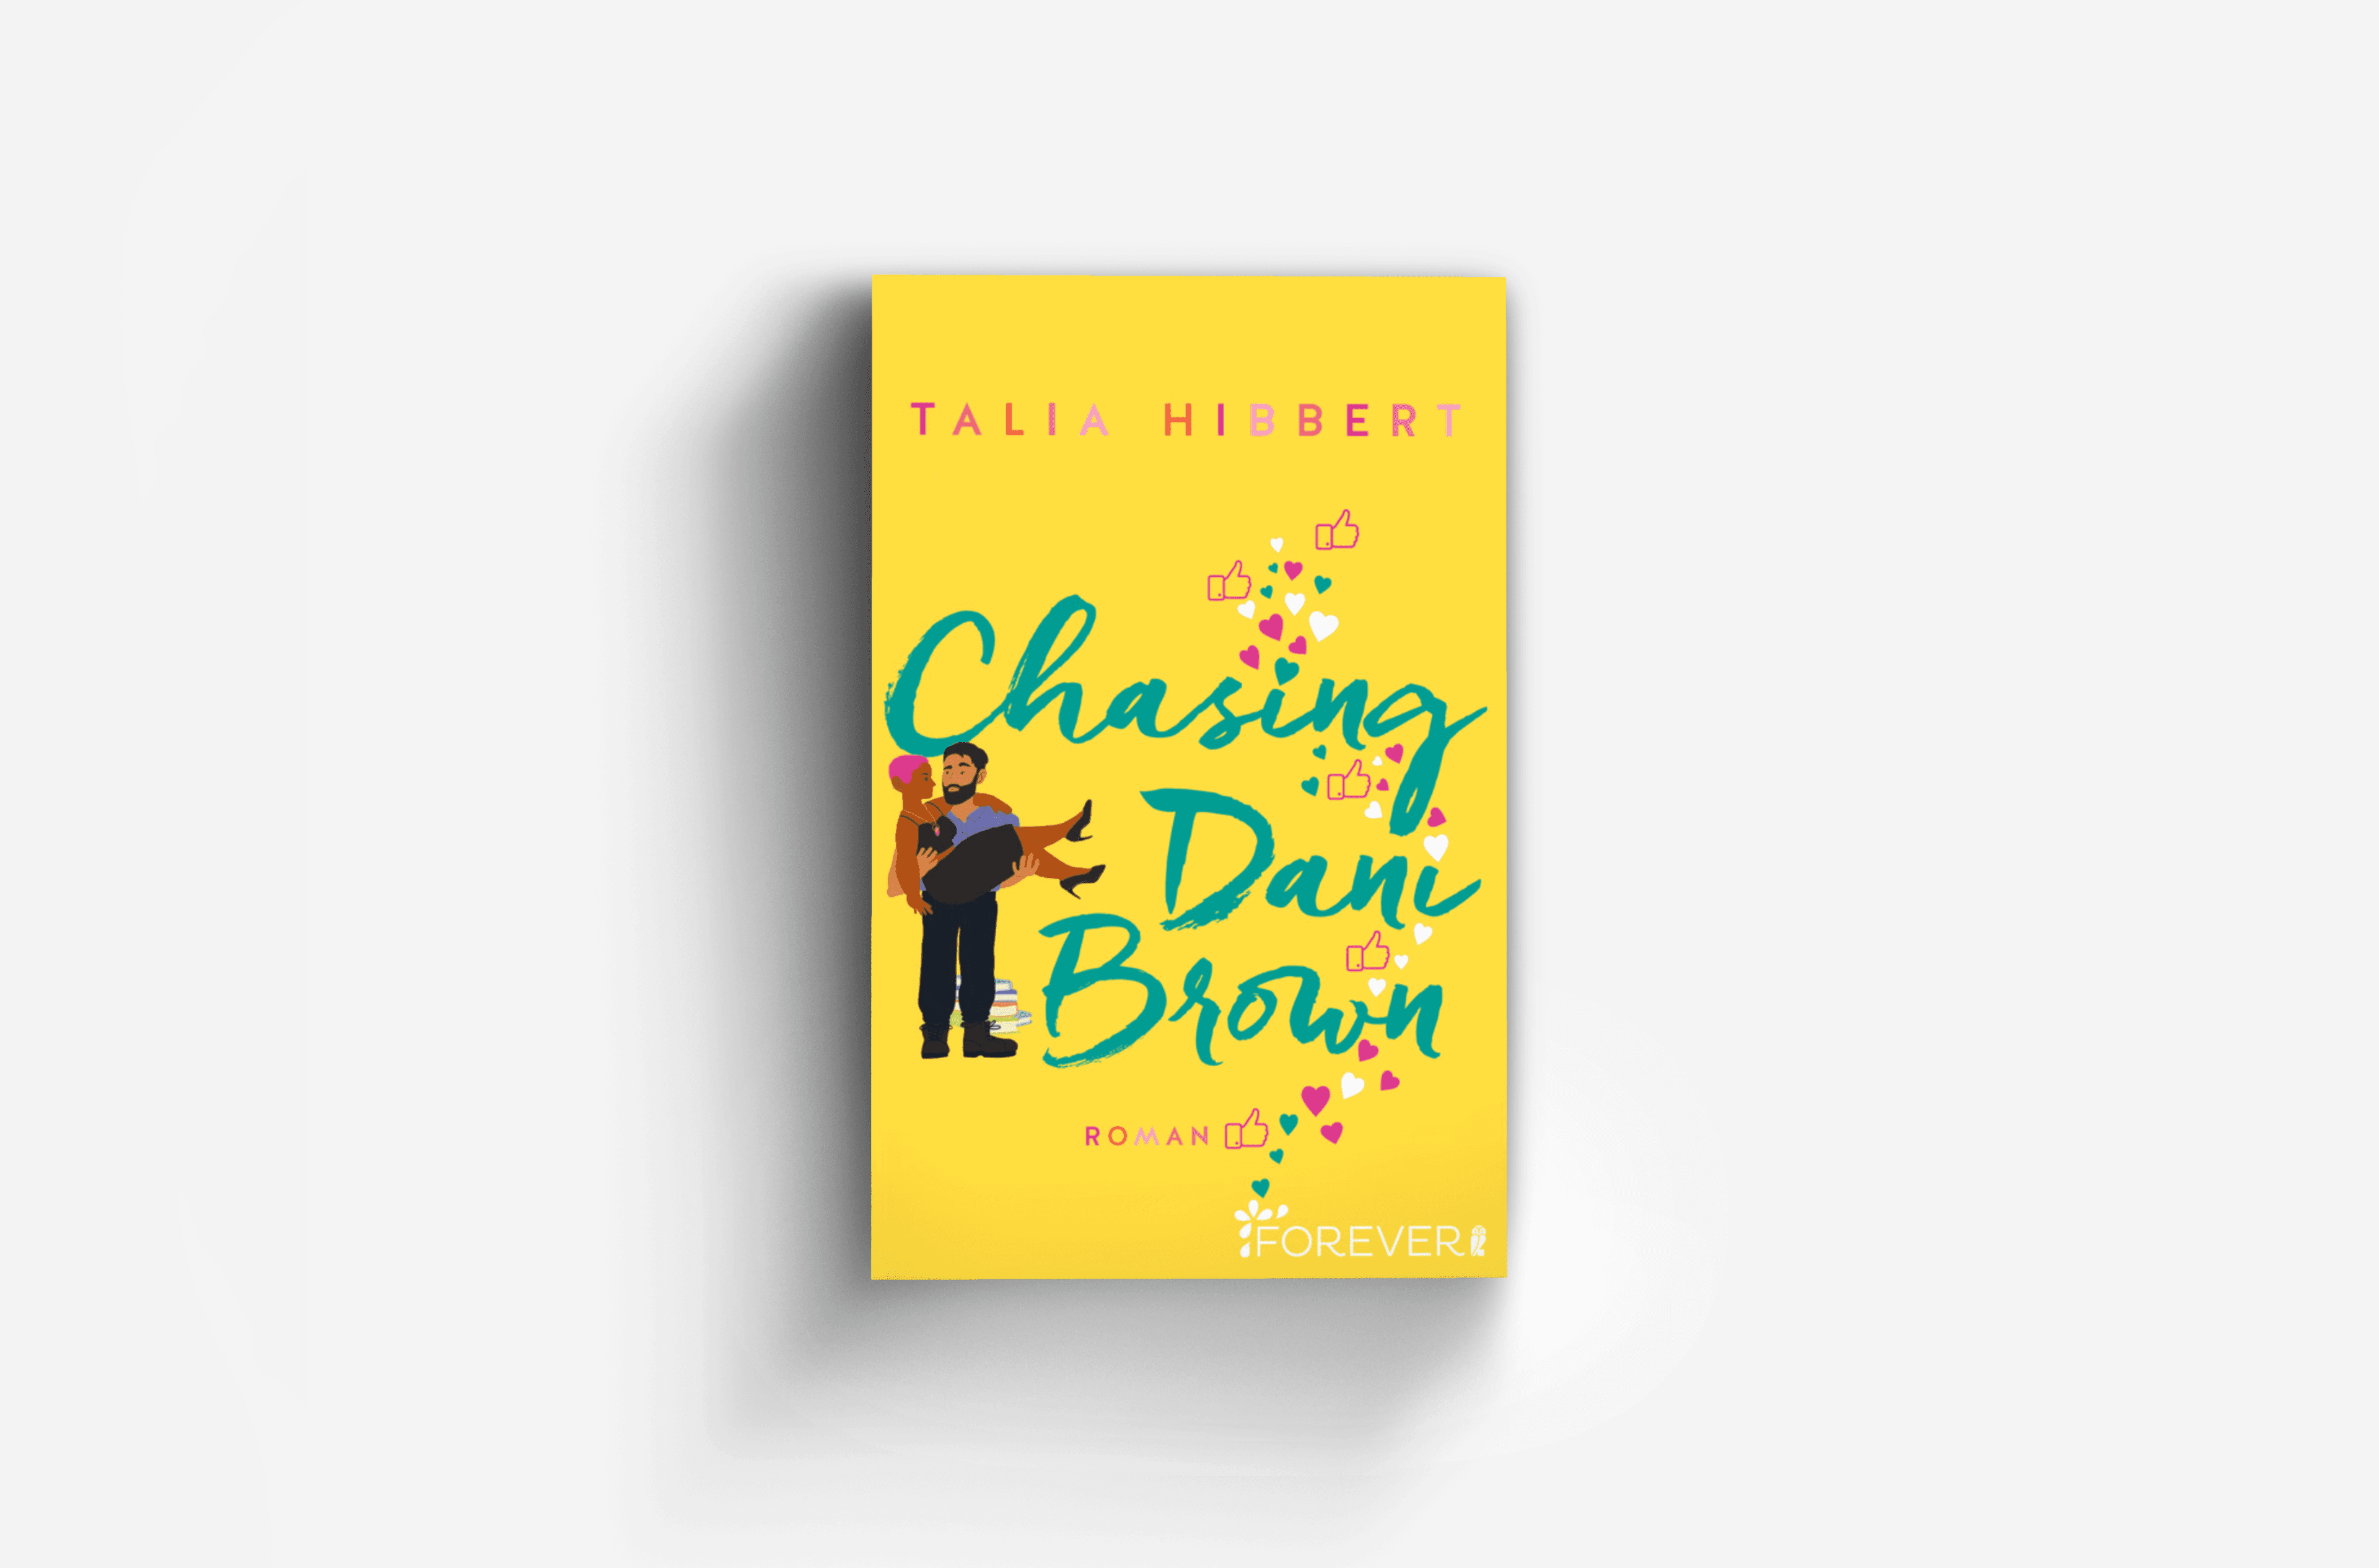 Buchcover von Chasing Dani Brown (Brown Sisters 2)